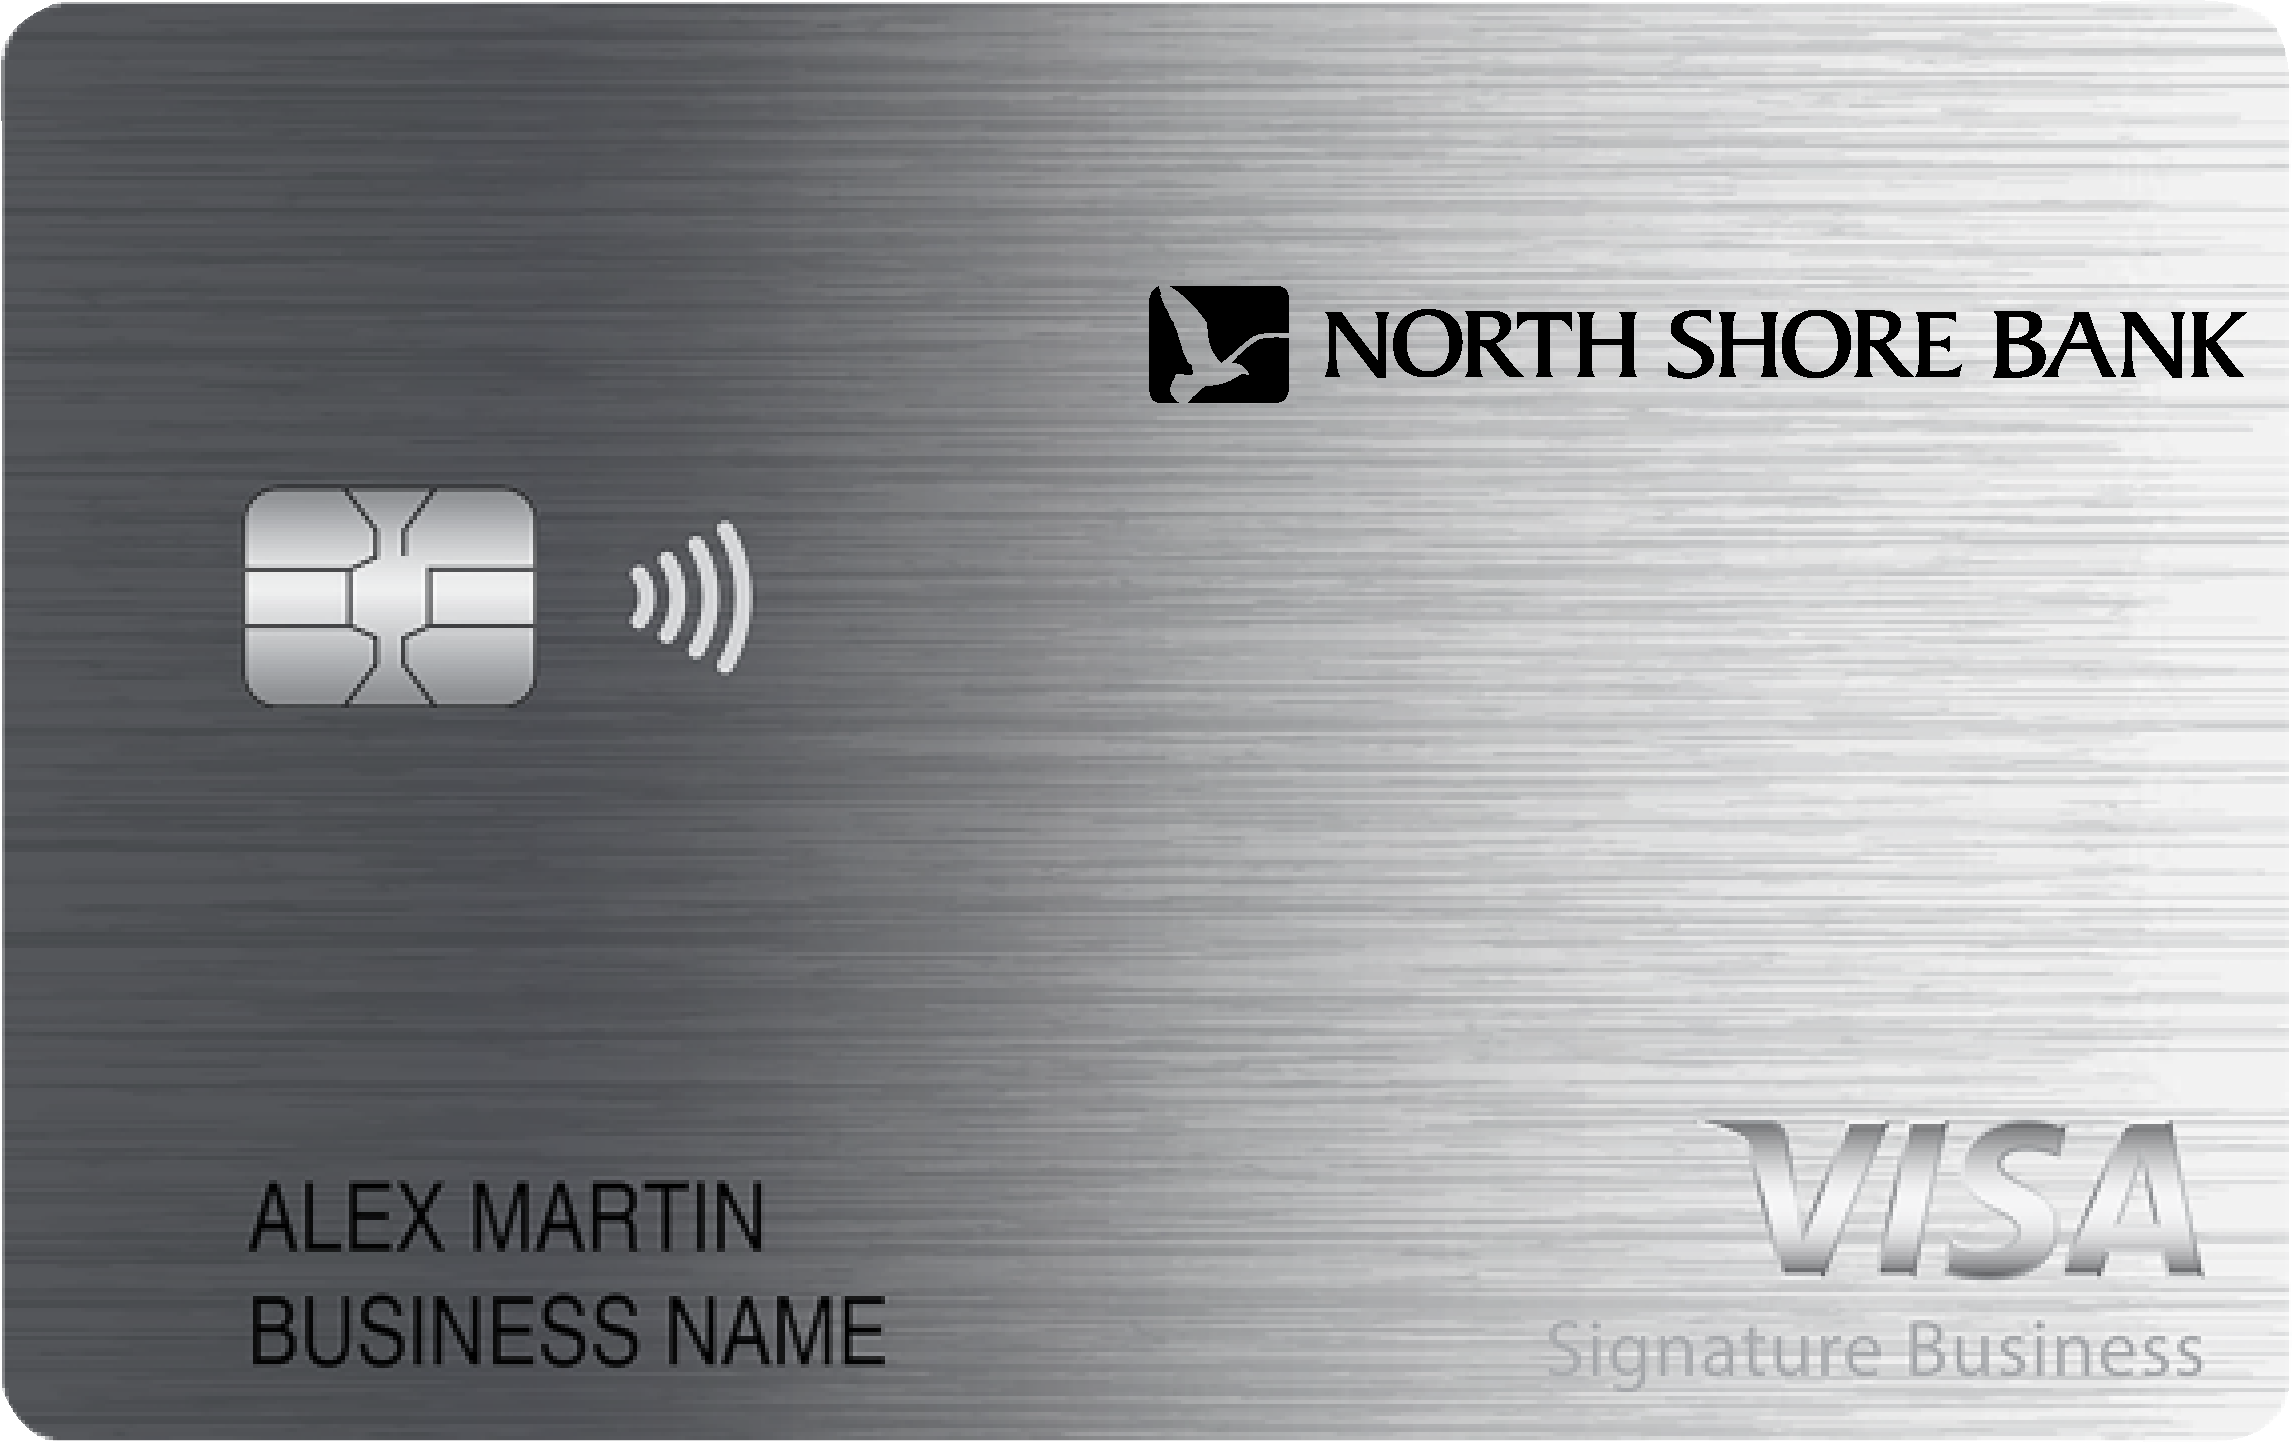 North Shore Bank Smart Business Rewards Card